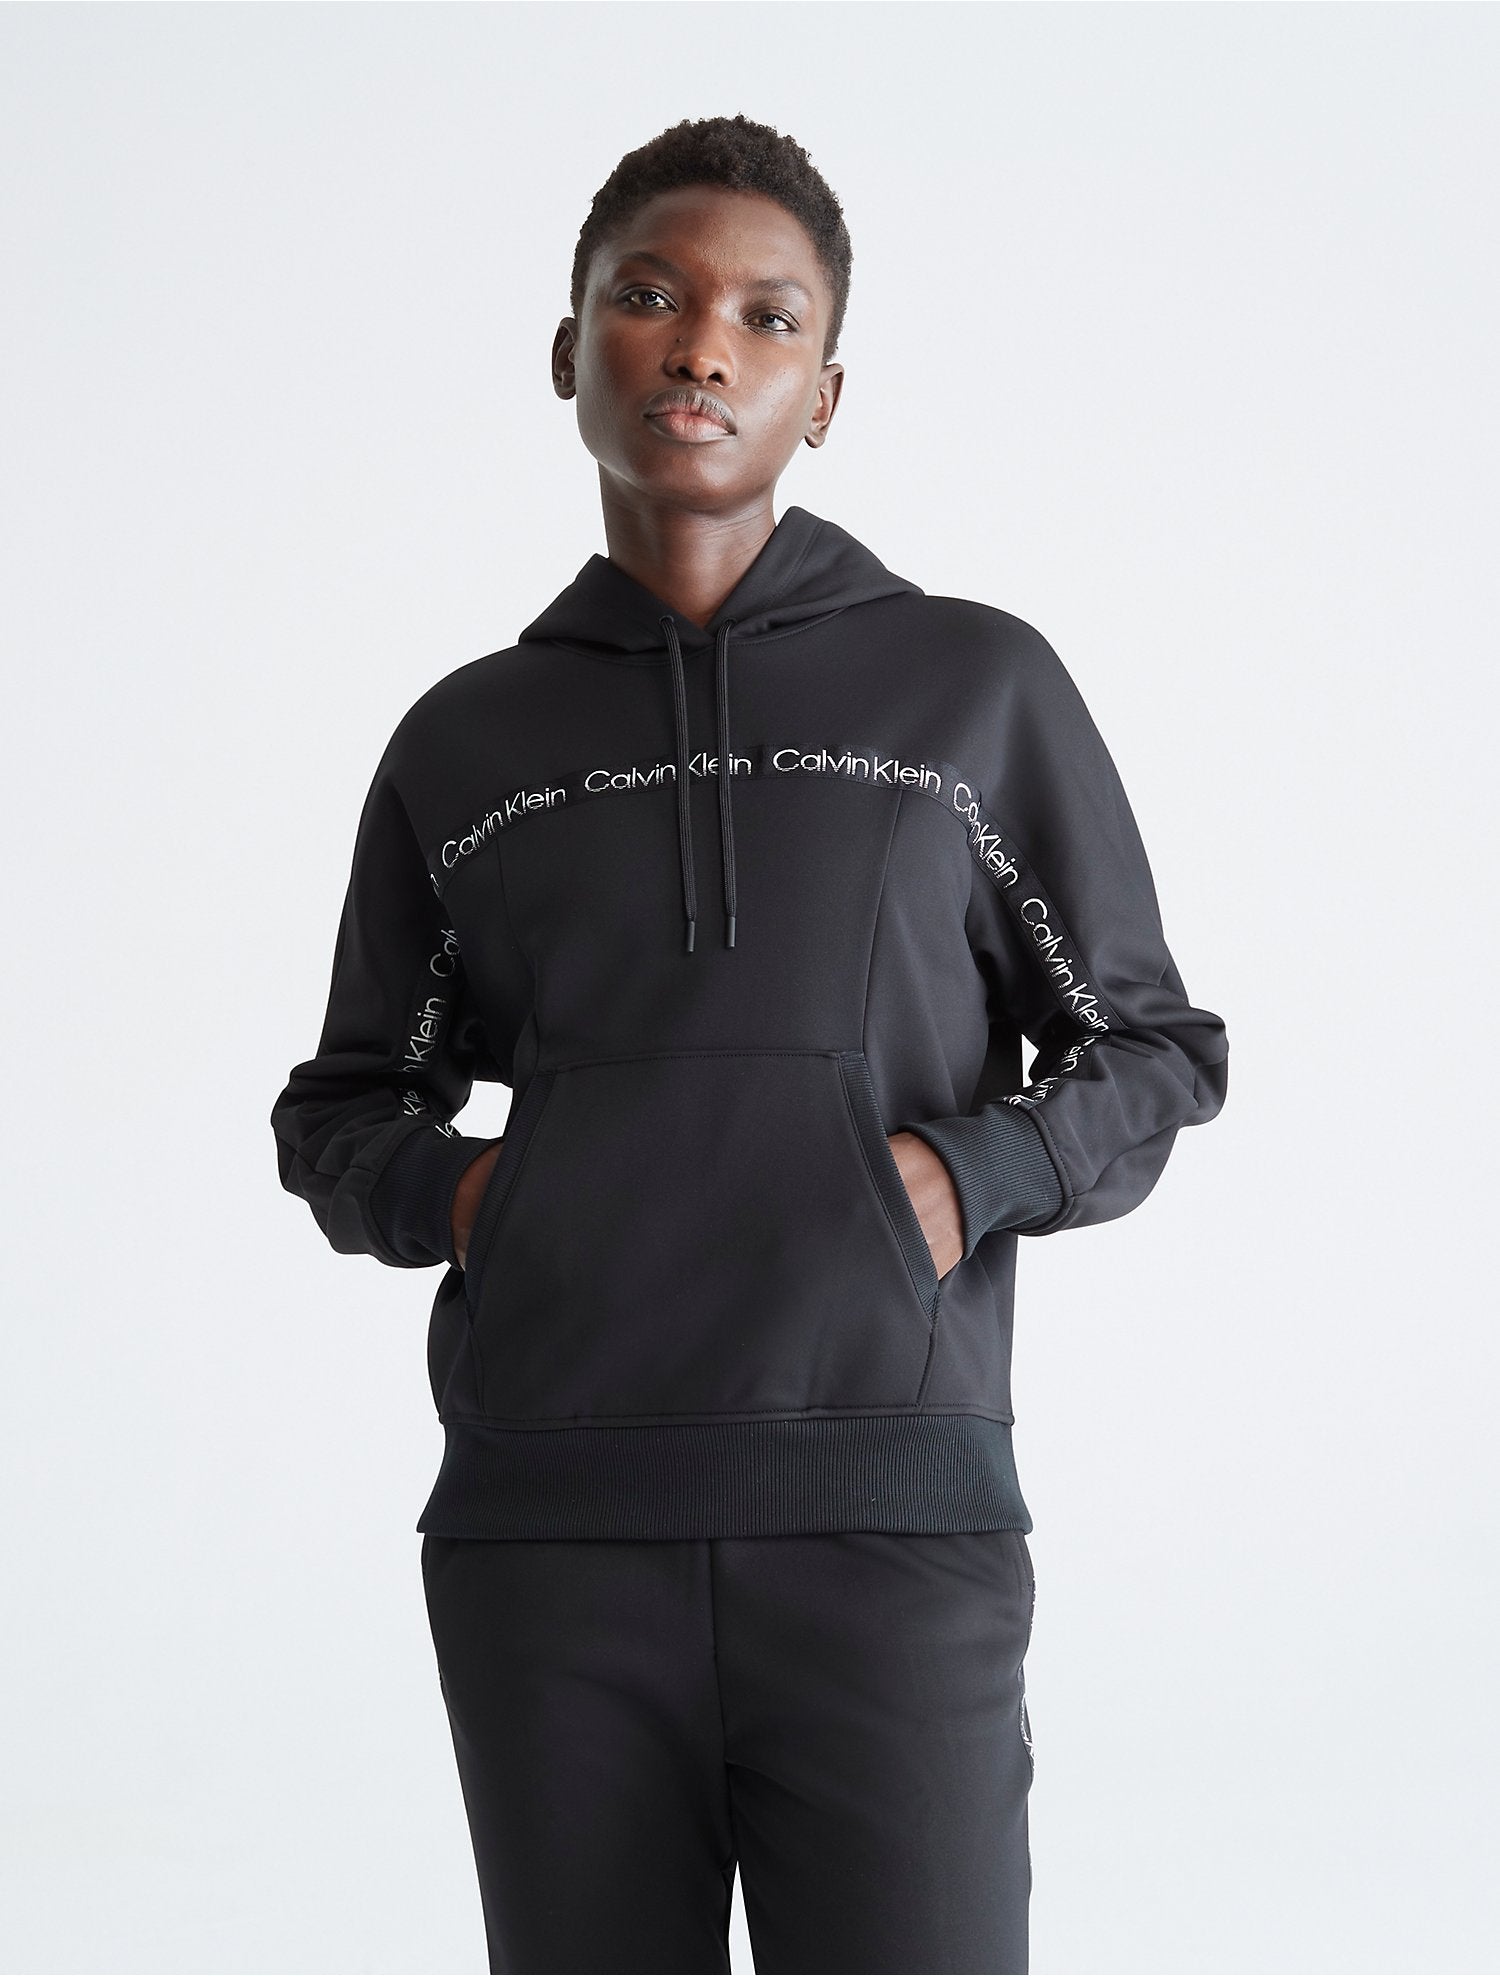 Calvin Klein Performance Embrace Hooded Zip Jacket - Women